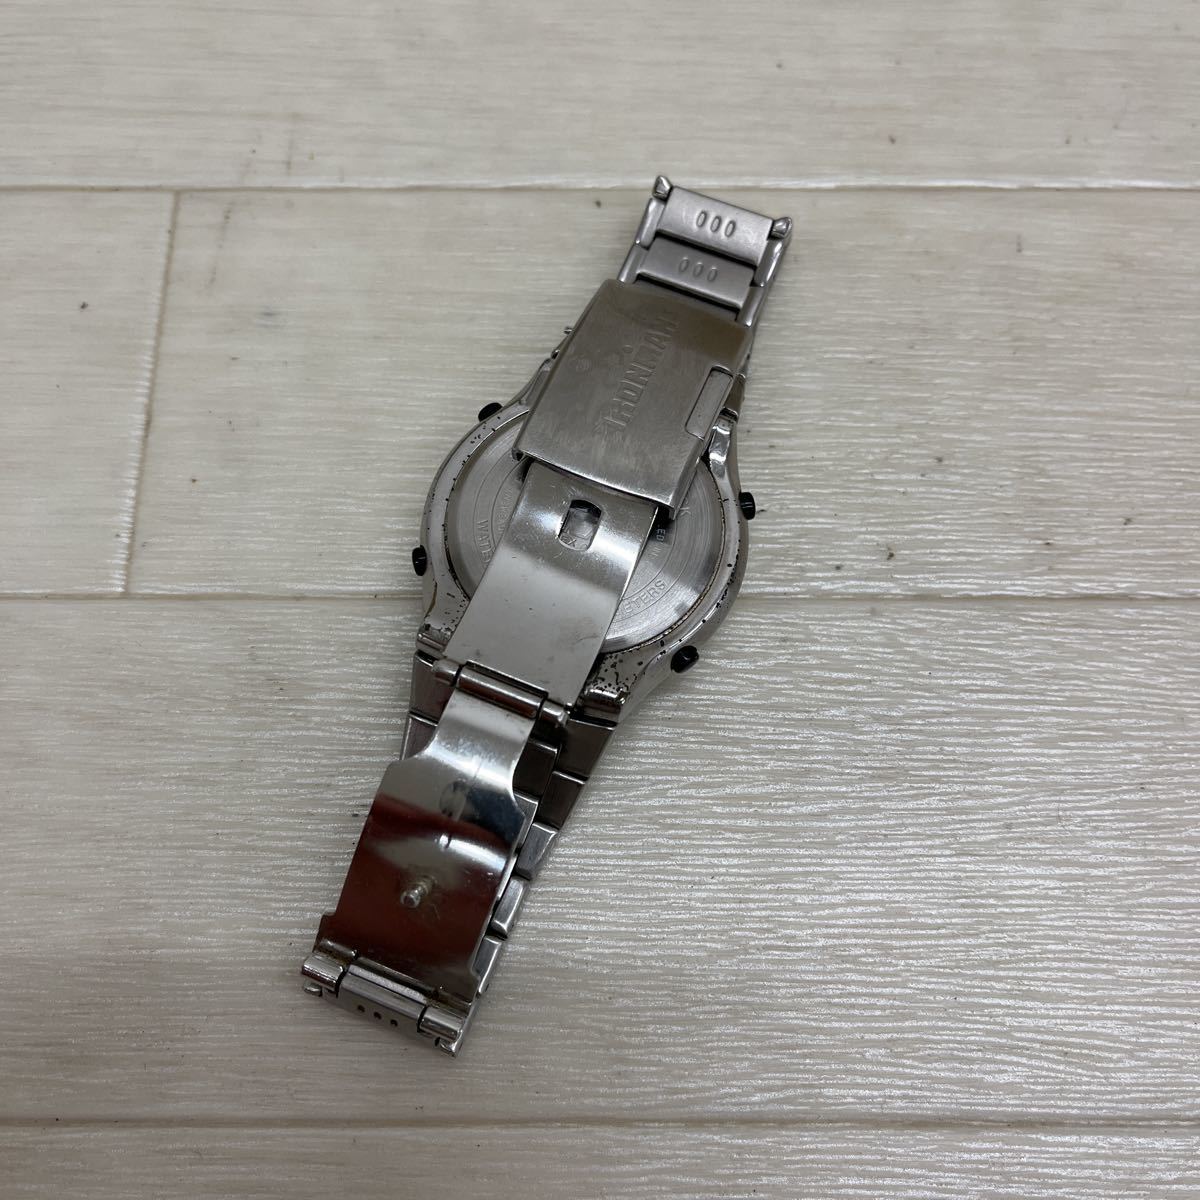 1162◎ TIMEX IRONMAN タイメックス CR2016 861 小物 時計 デジタル 腕時計 メタルバンド カジュアル シルバー メンズ_画像2